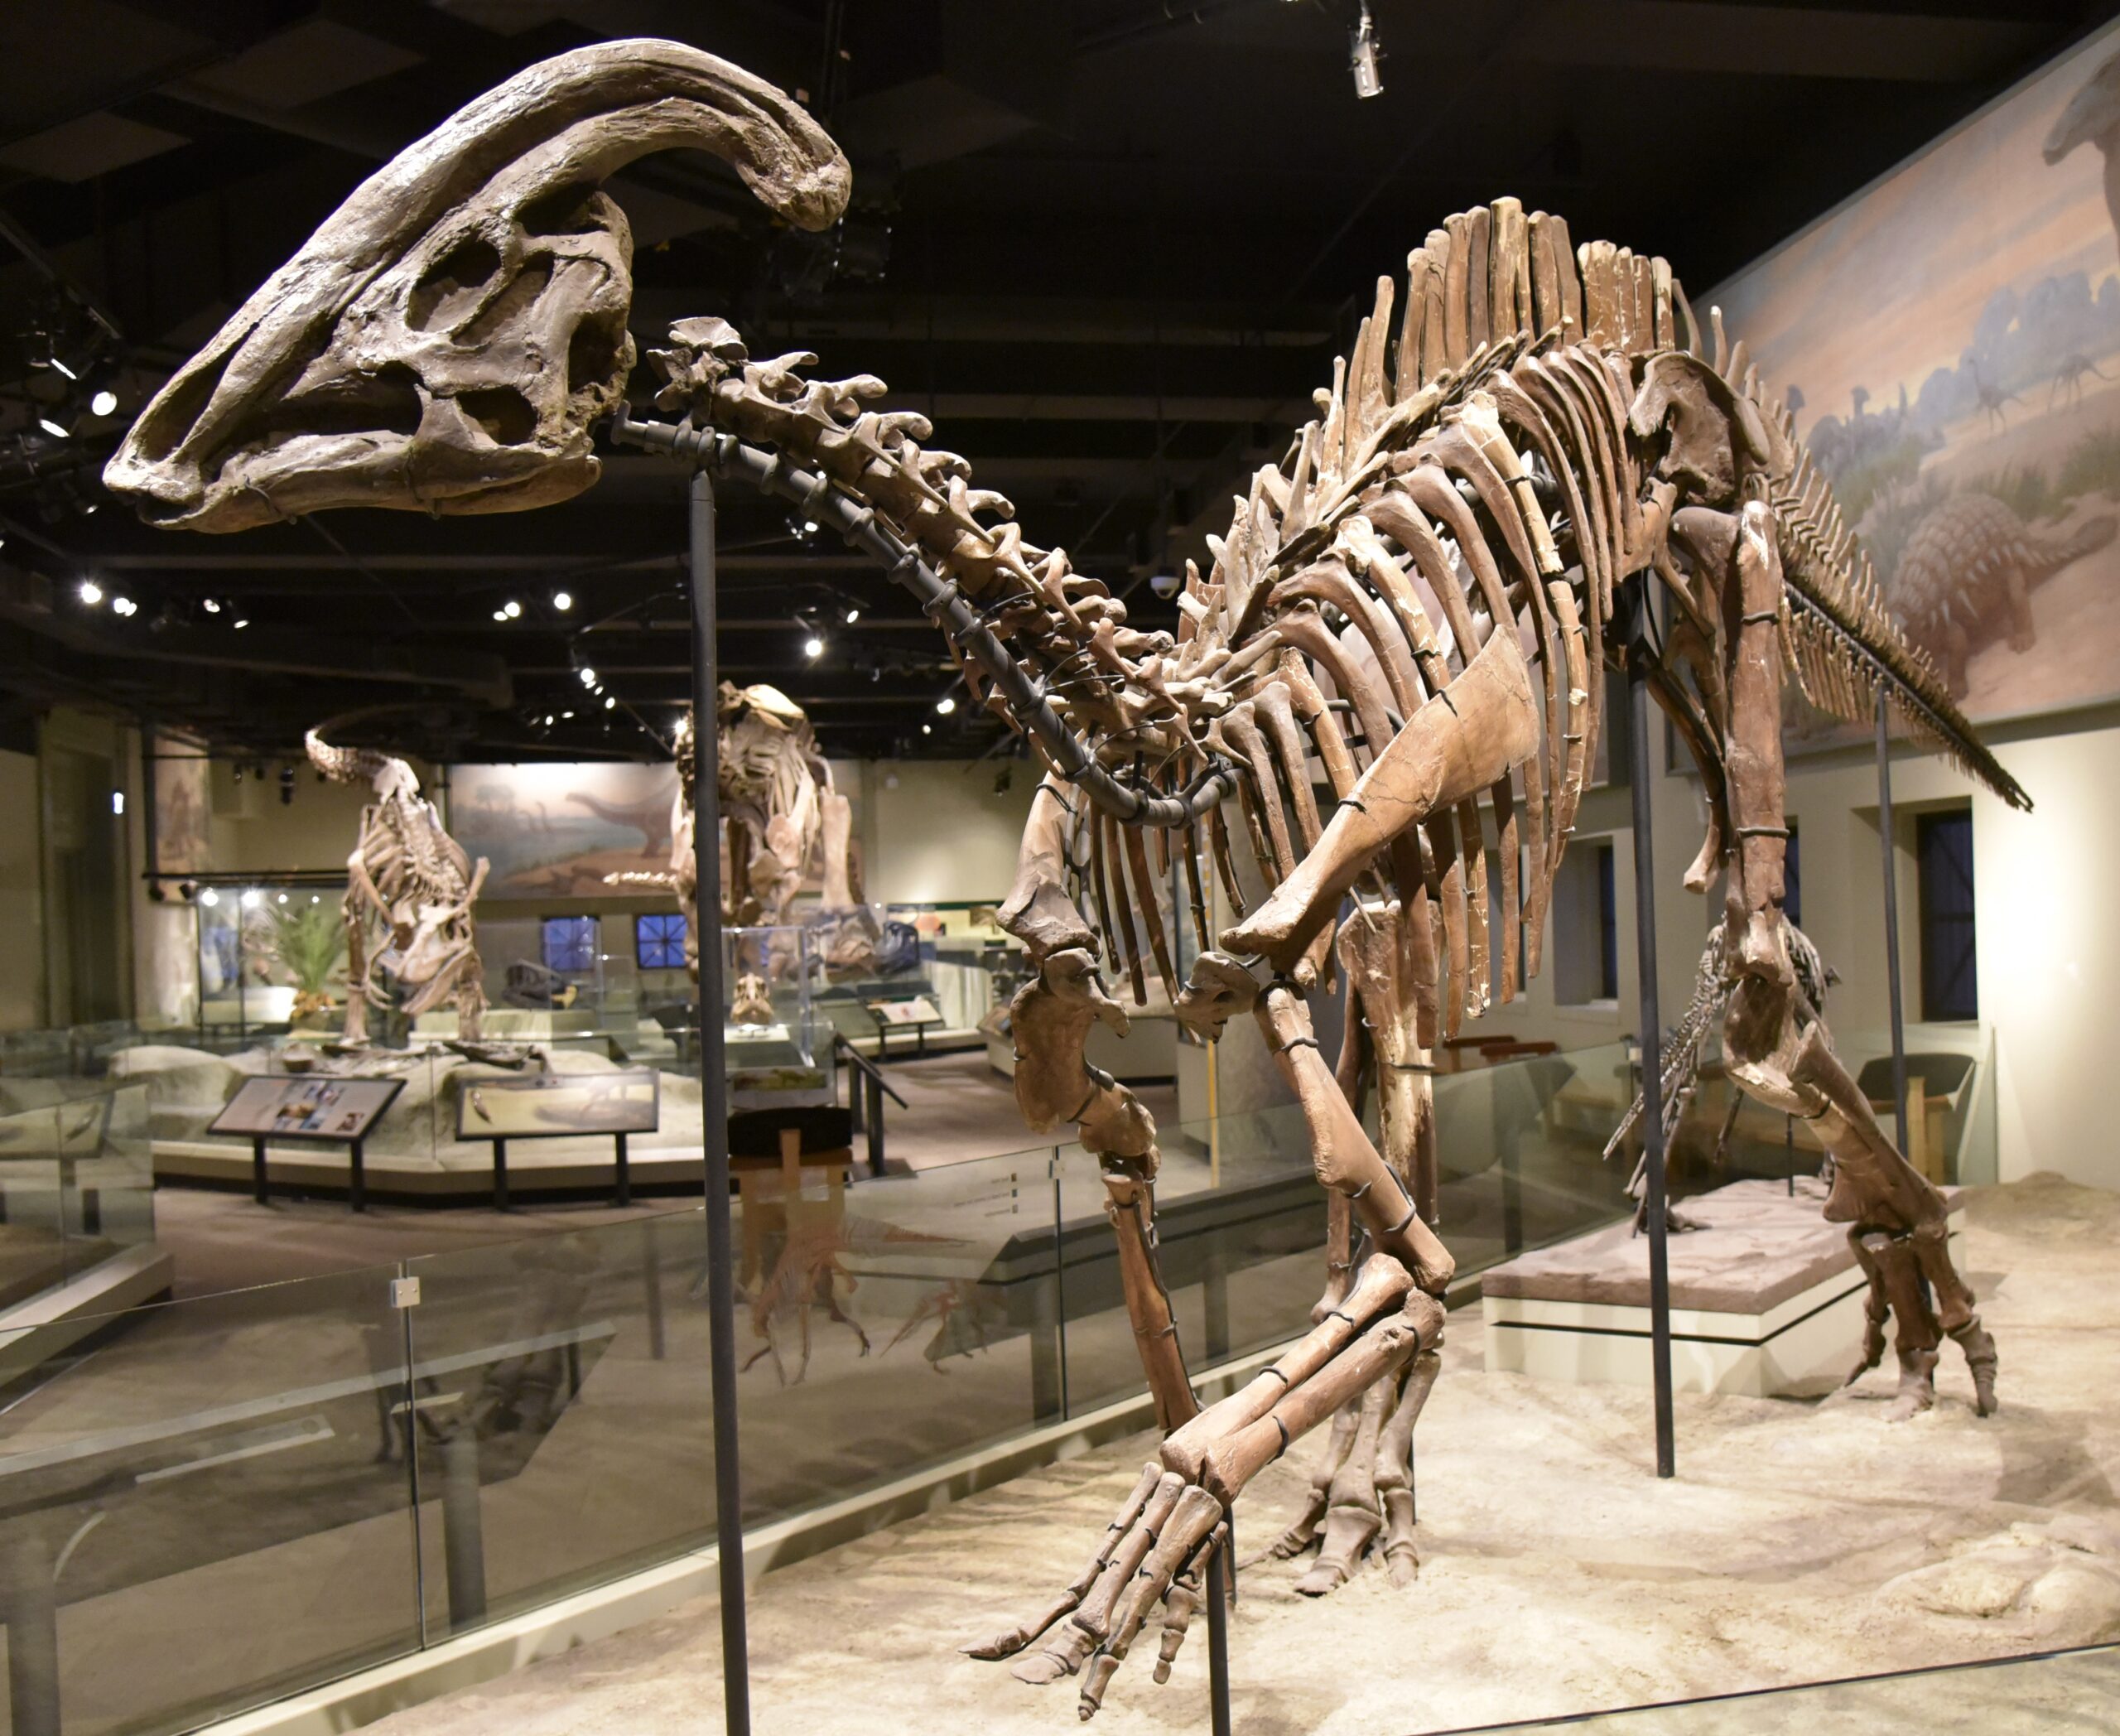 Duck-billed dinosaurs had the same bone tumors as people